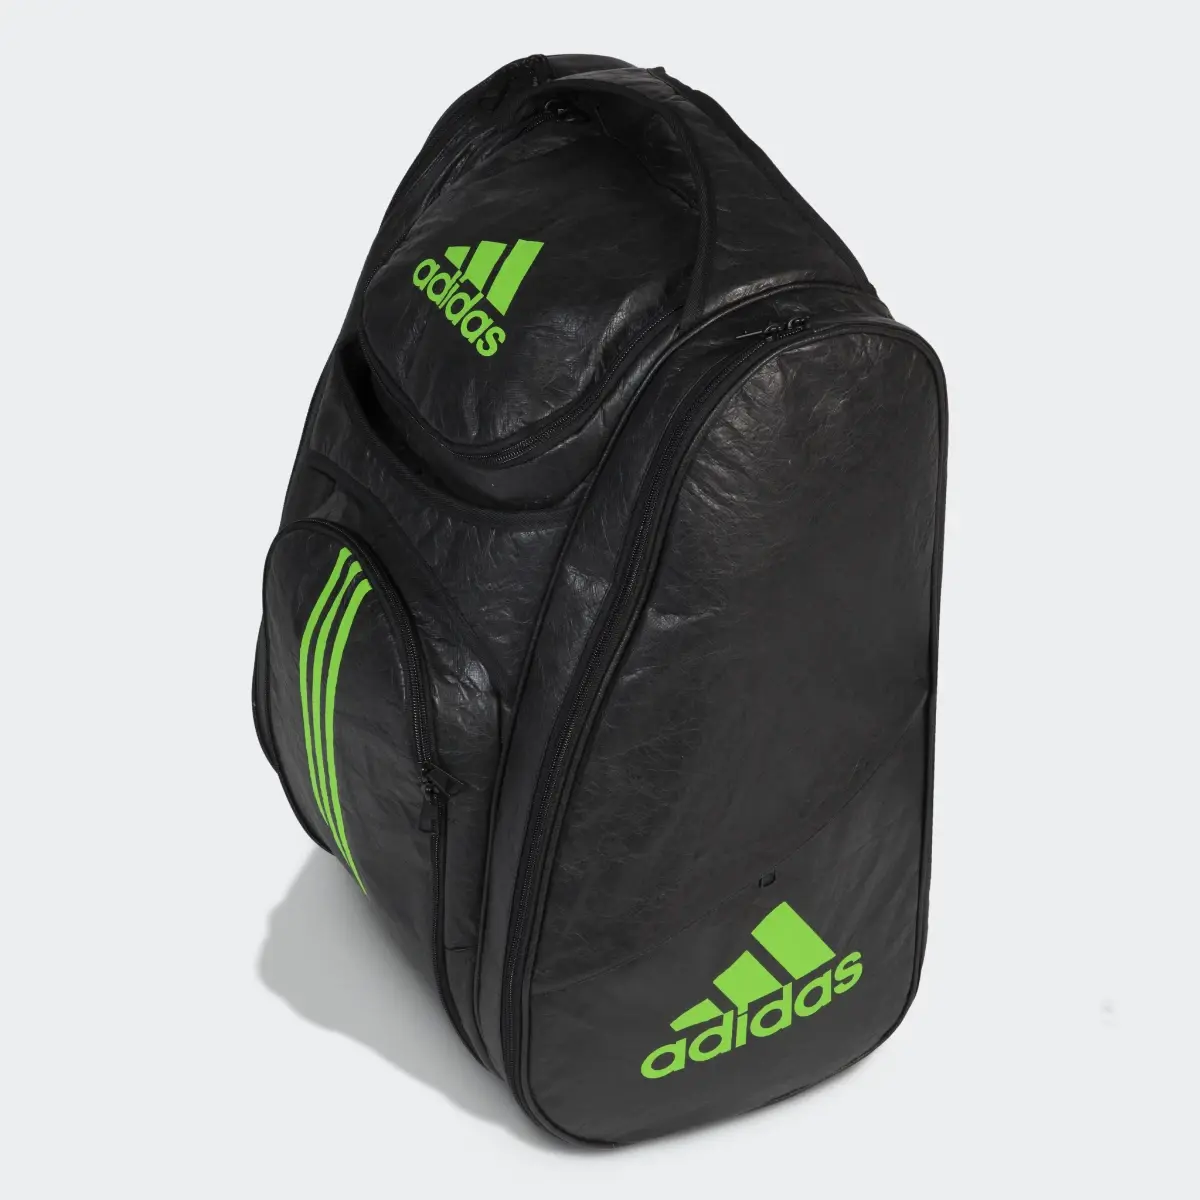 Adidas Multigame Racquet Bag. 1